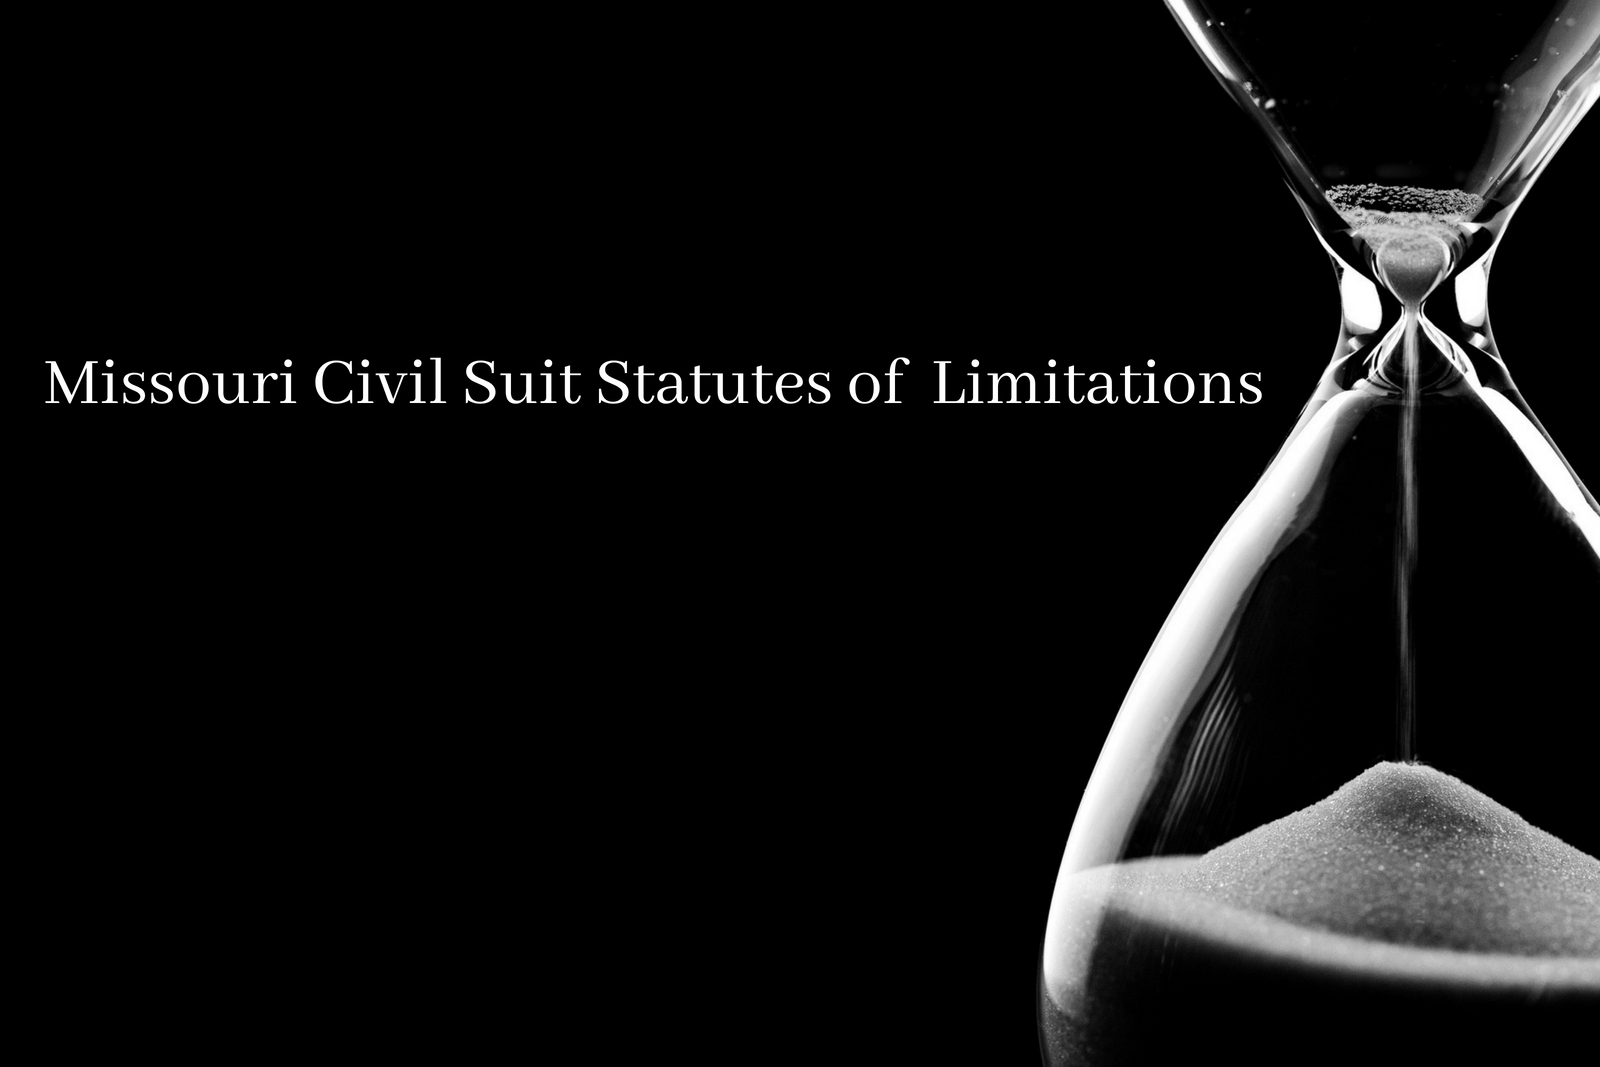 Missouri Civil Suit Statutes of Limitations